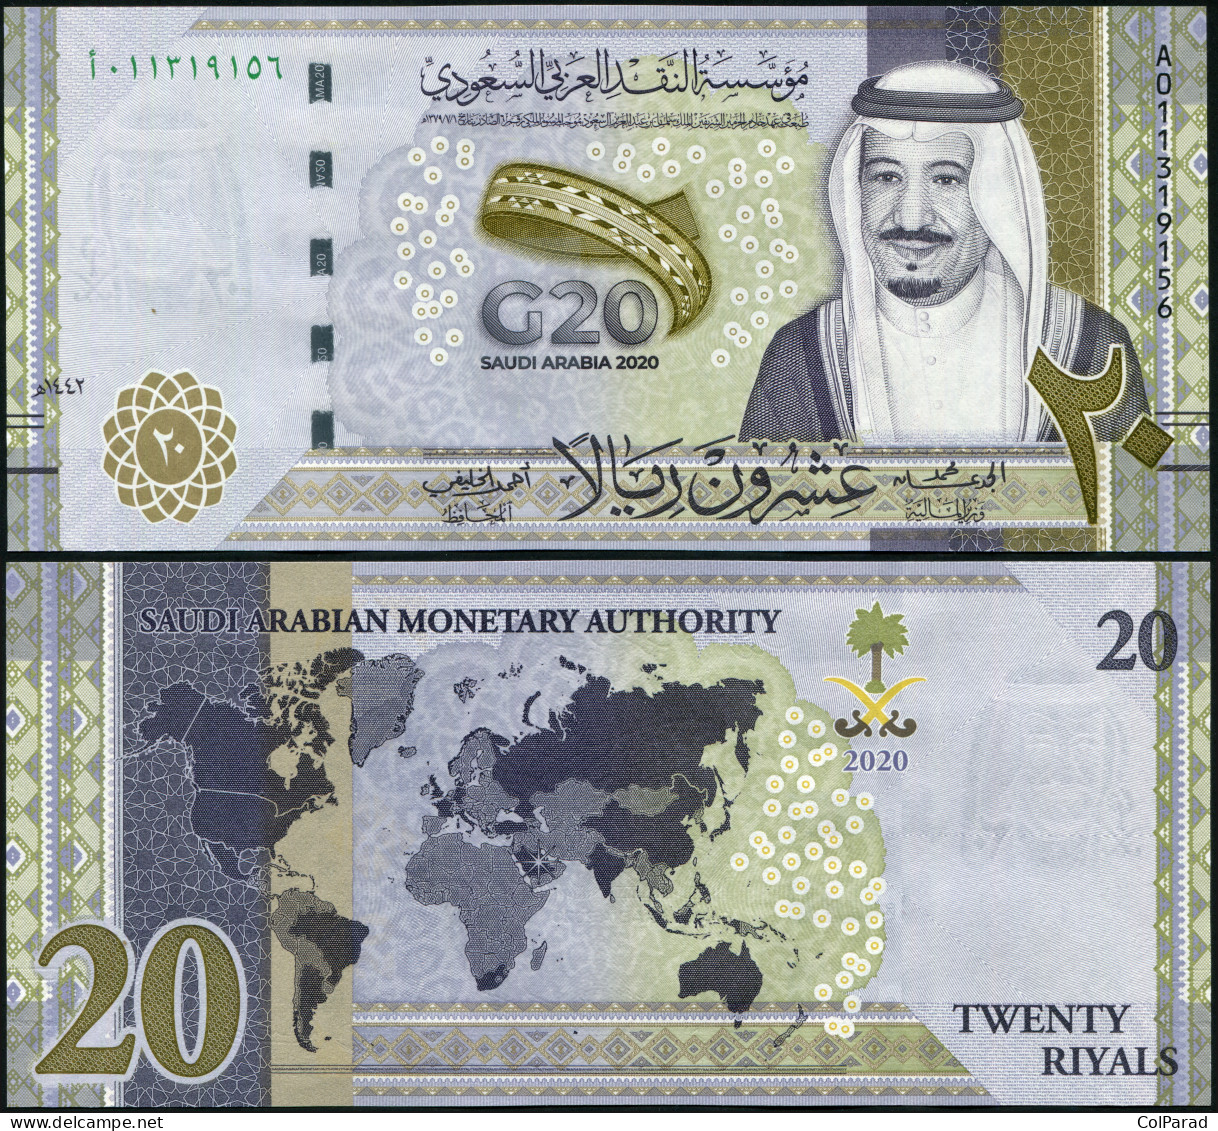 SAUDI ARABIA 20 RIYALS - 2020 - Paper Unc - P.NL Banknote - G20 Summit - Saudi Arabia